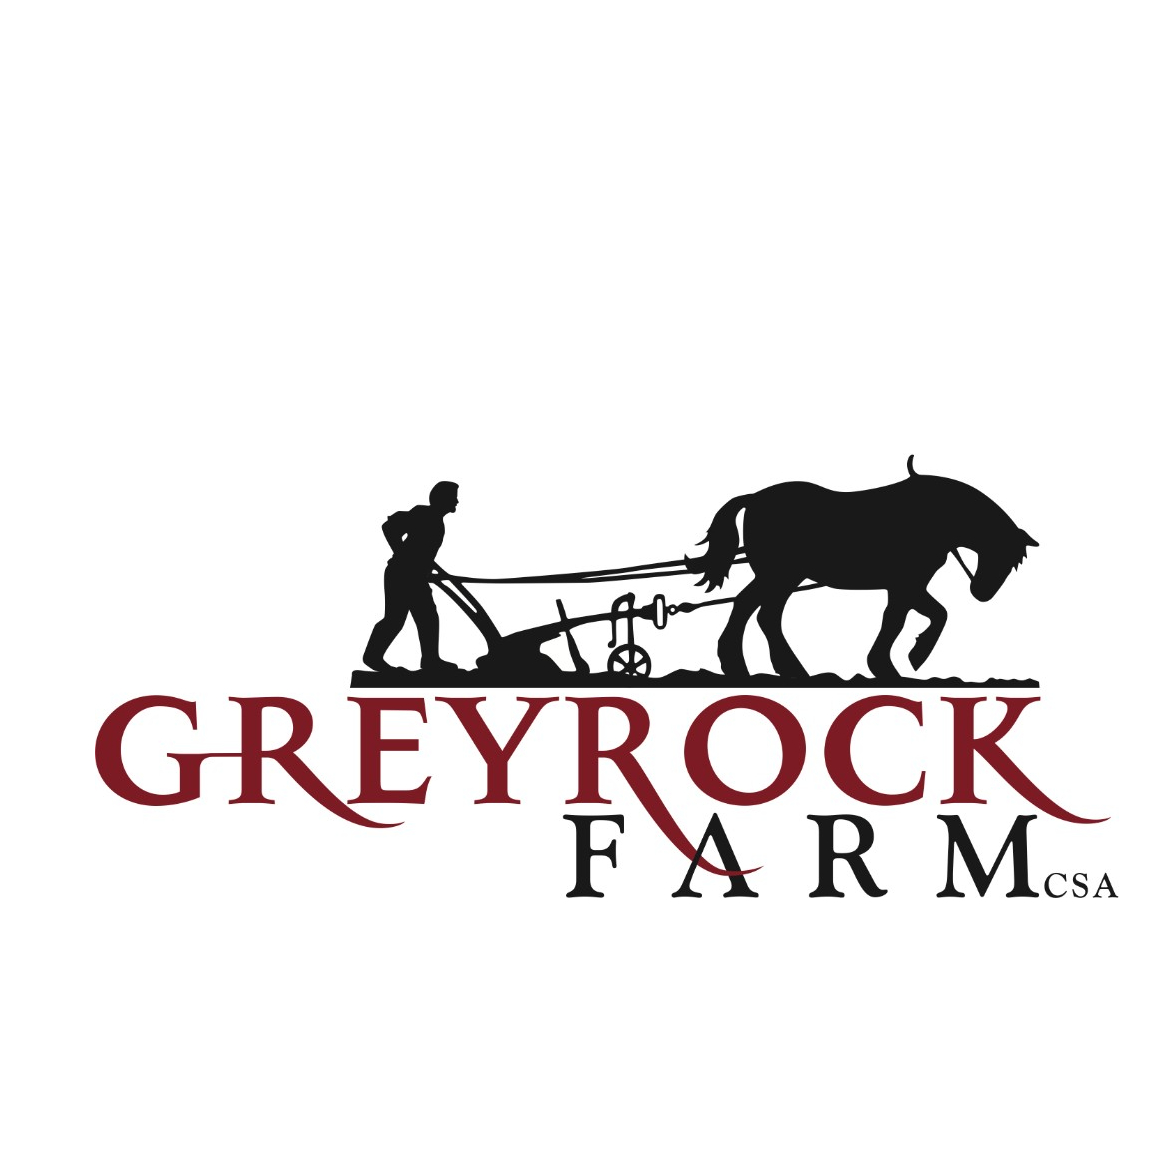 Greyrock Farm CSA LLC